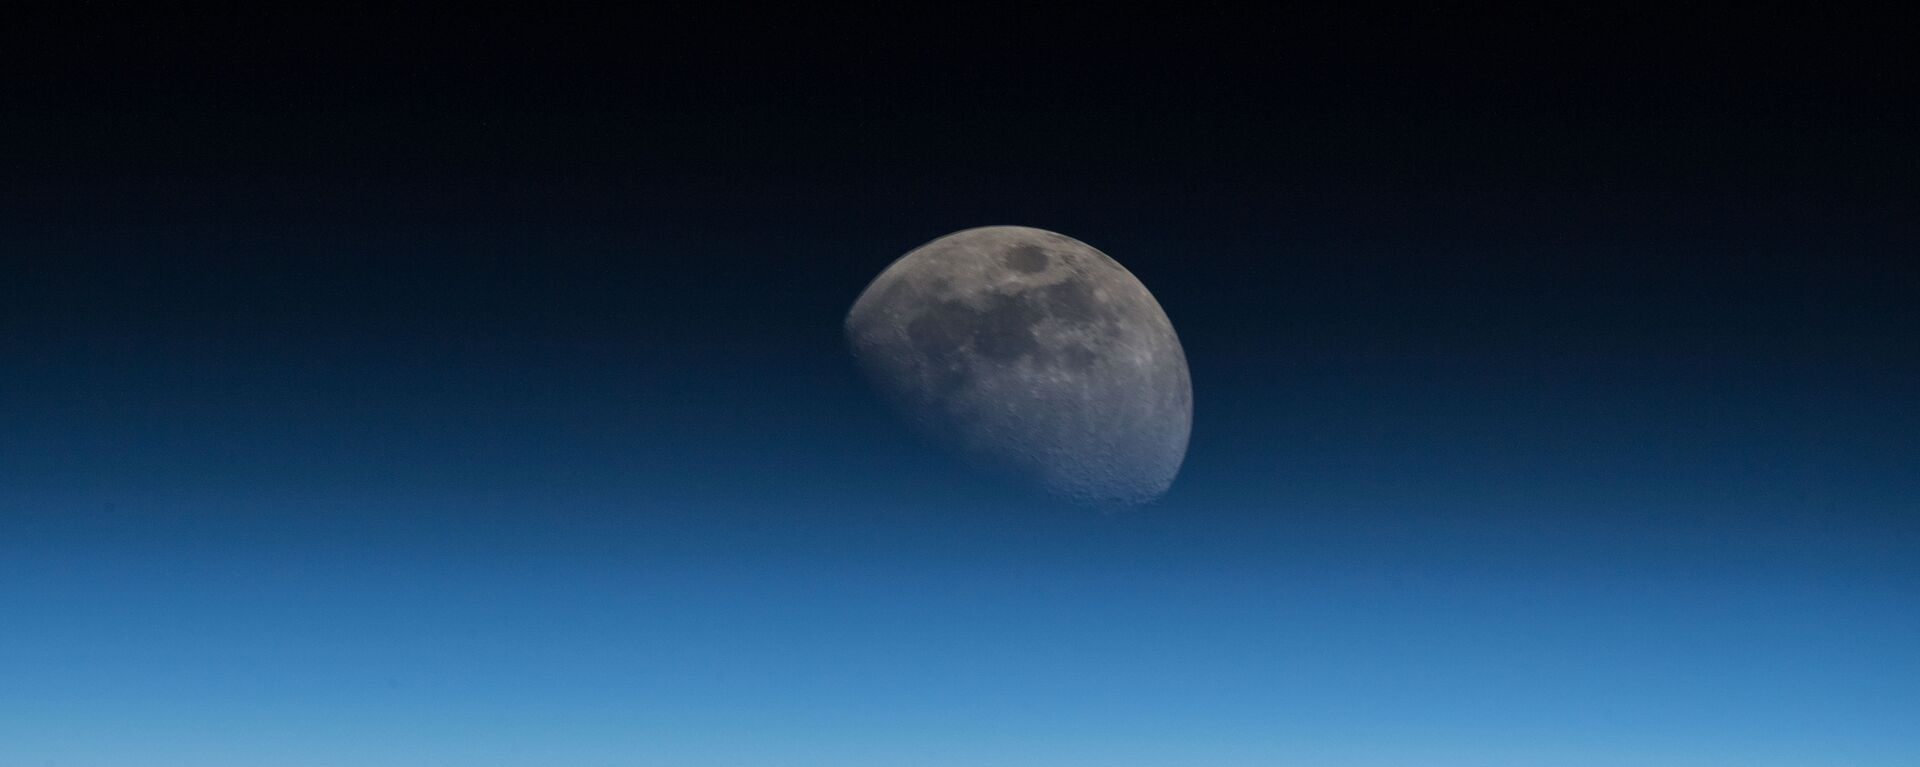 La Luna (imagen referencial) - Sputnik Mundo, 1920, 28.02.2020